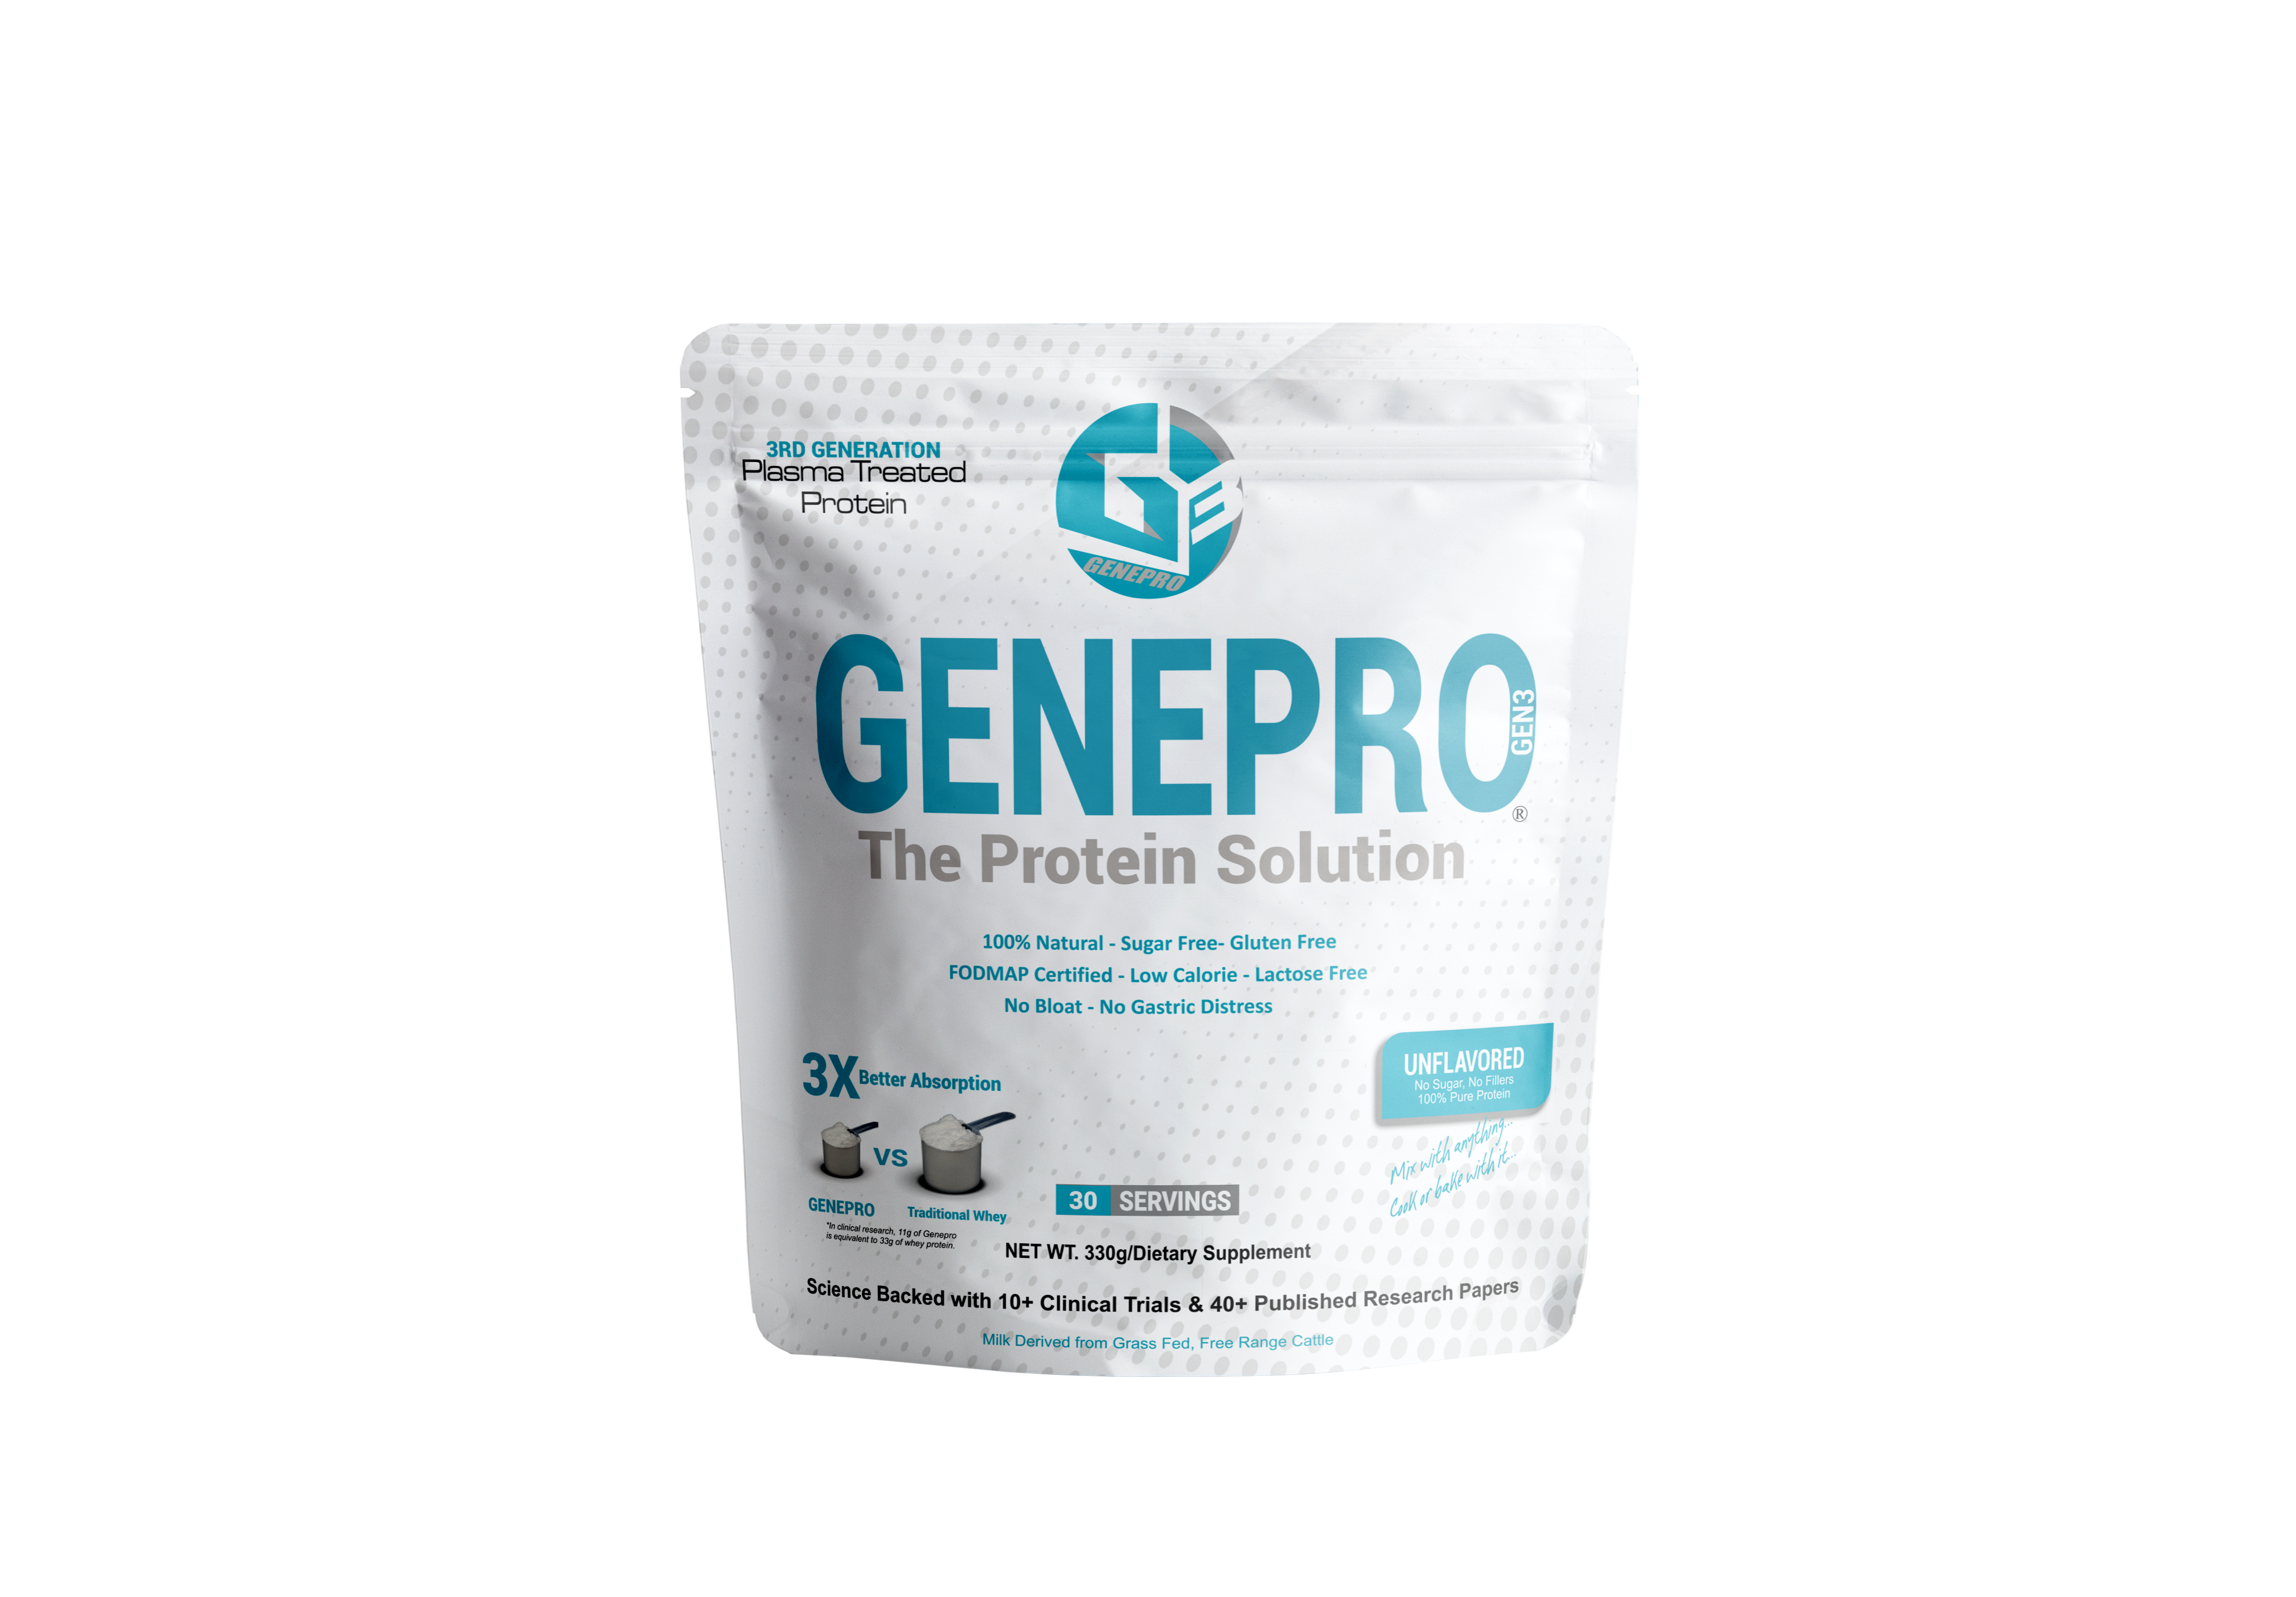 GENEPRO Gen3 UNFLAVORED PROTEIN without Immunolin - High-quality Protein Powder by GenePro at 